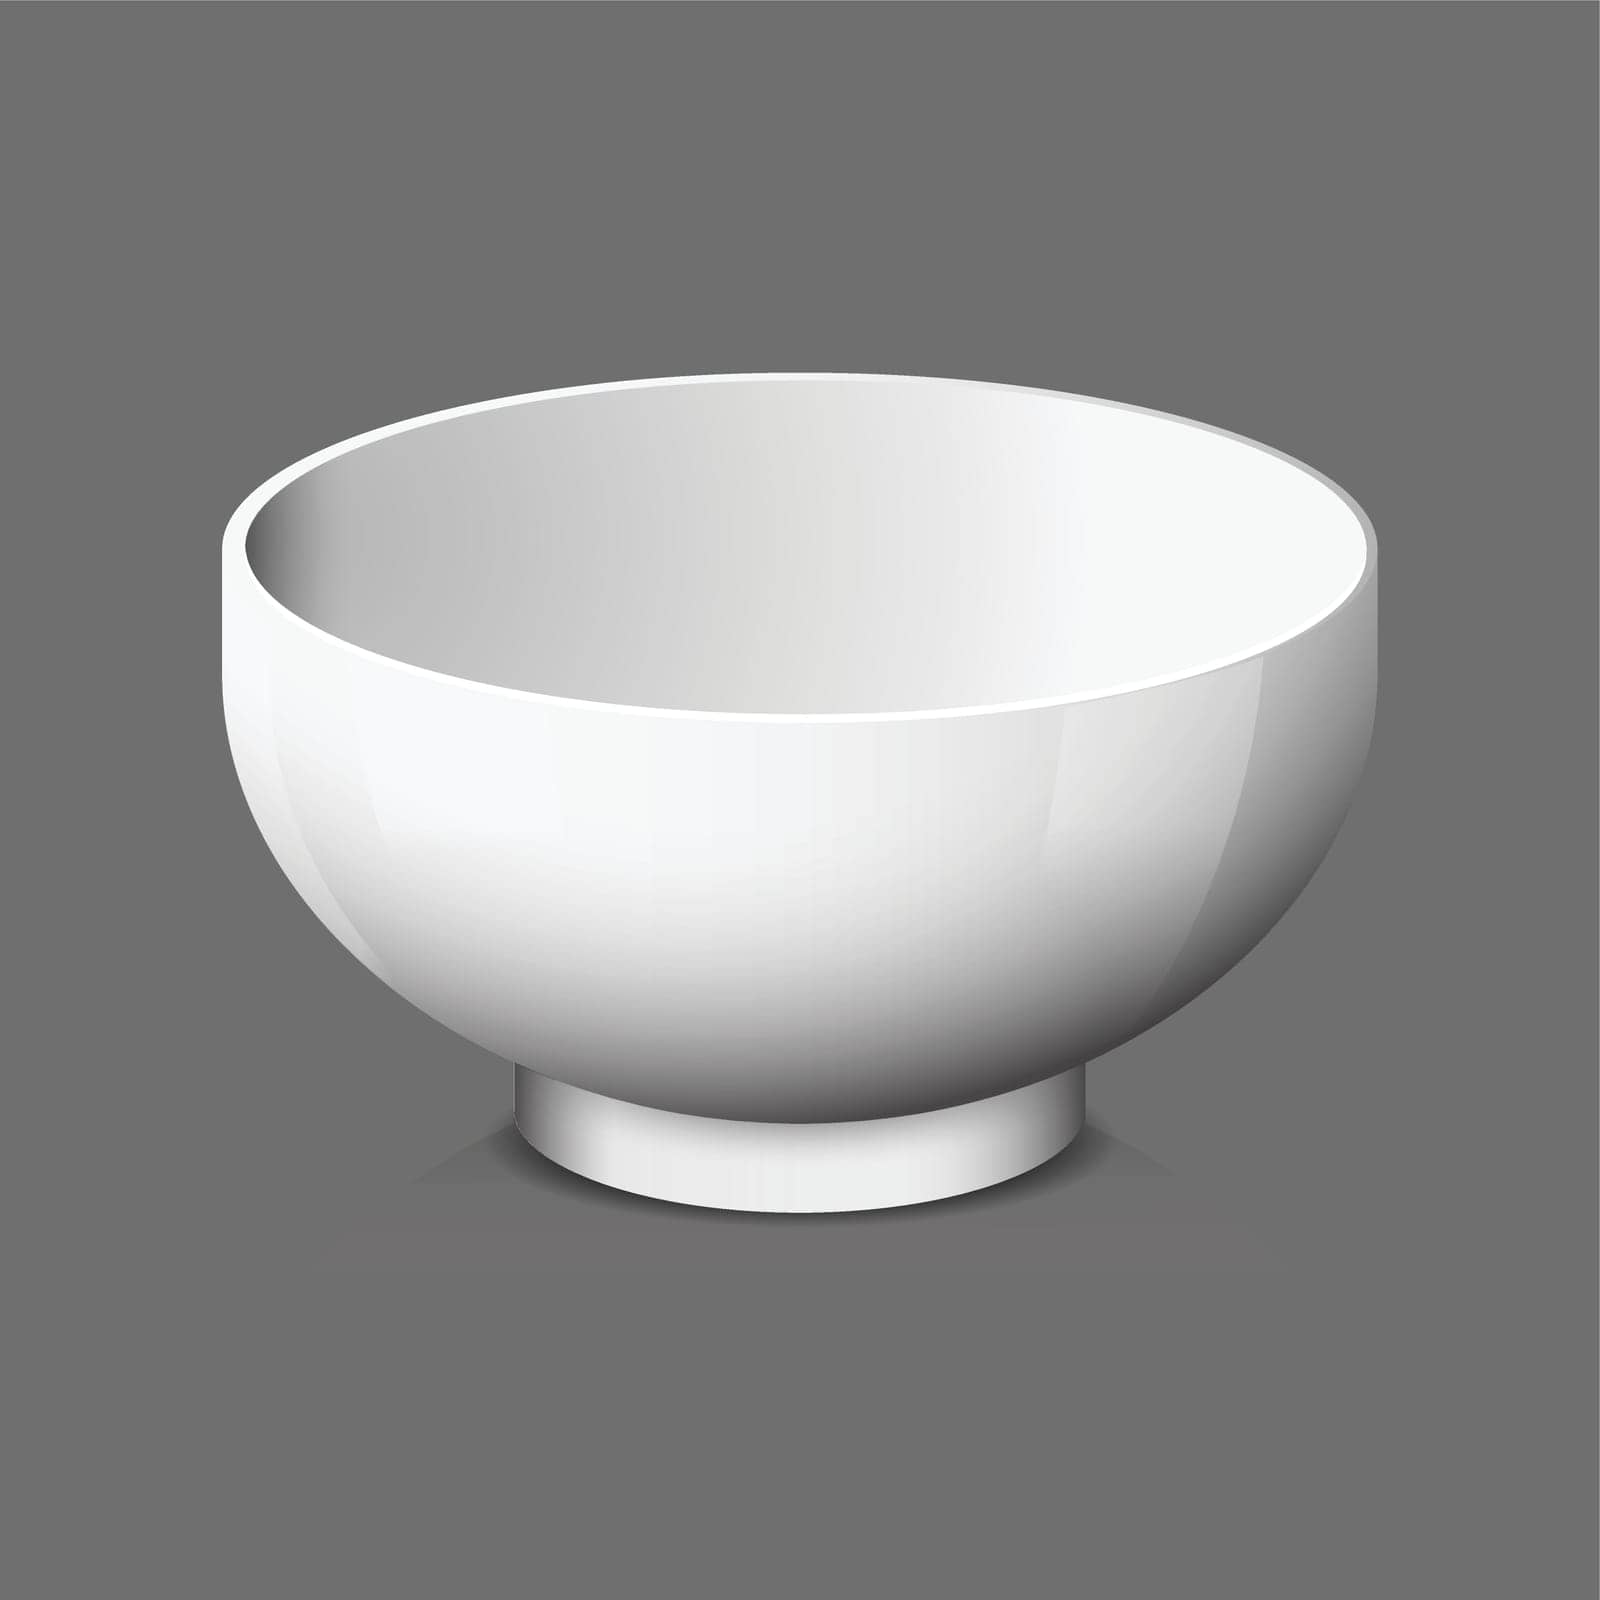 Porcelain bowl isolated illustration vector